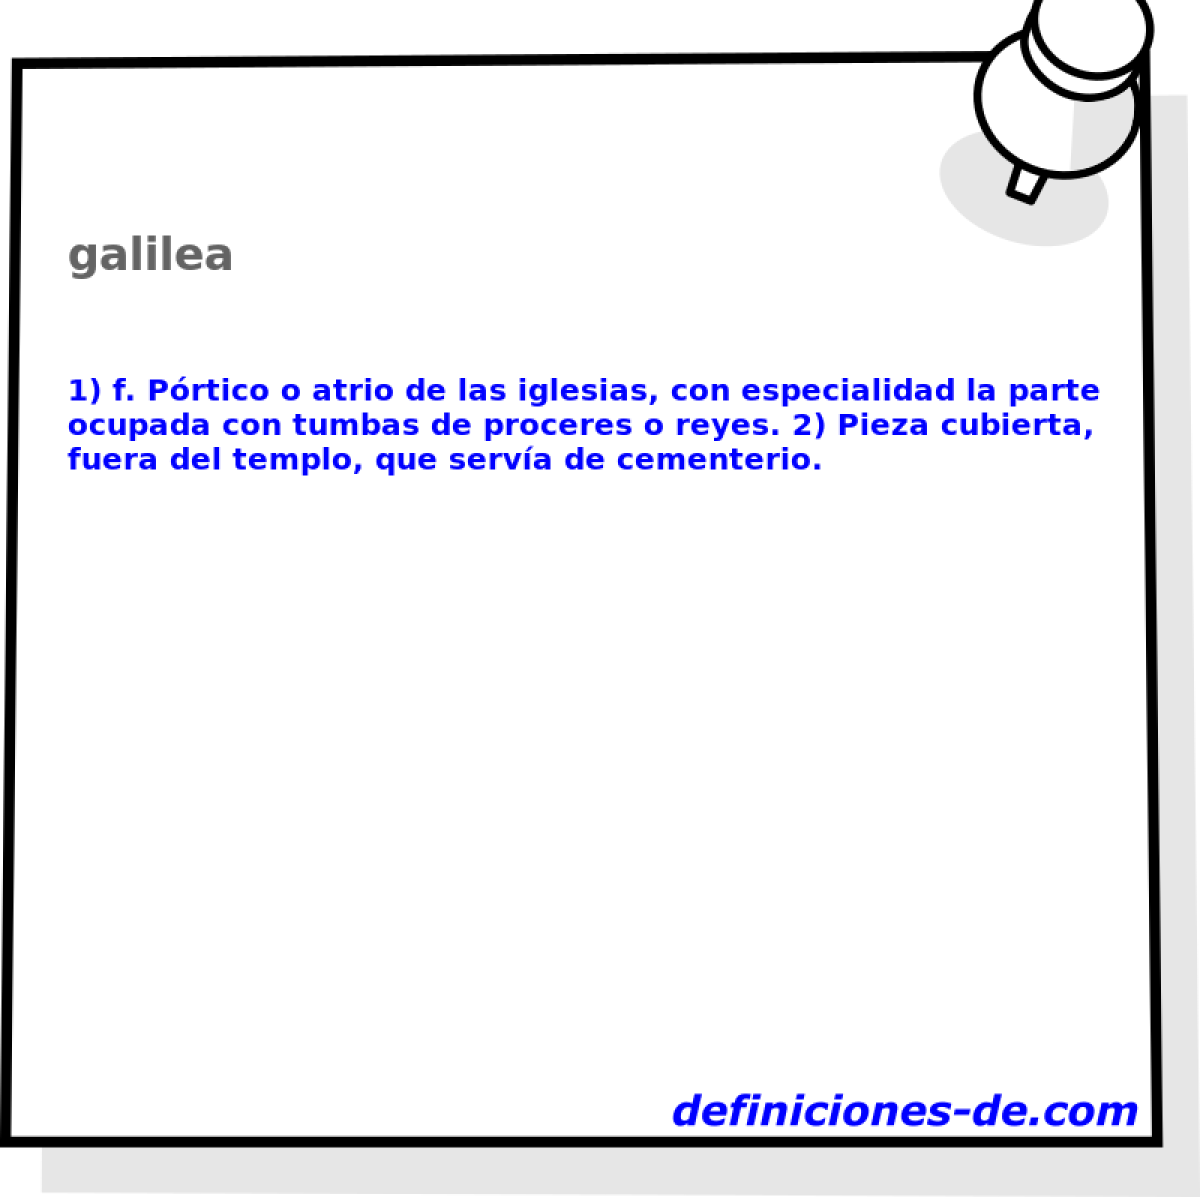 galilea 